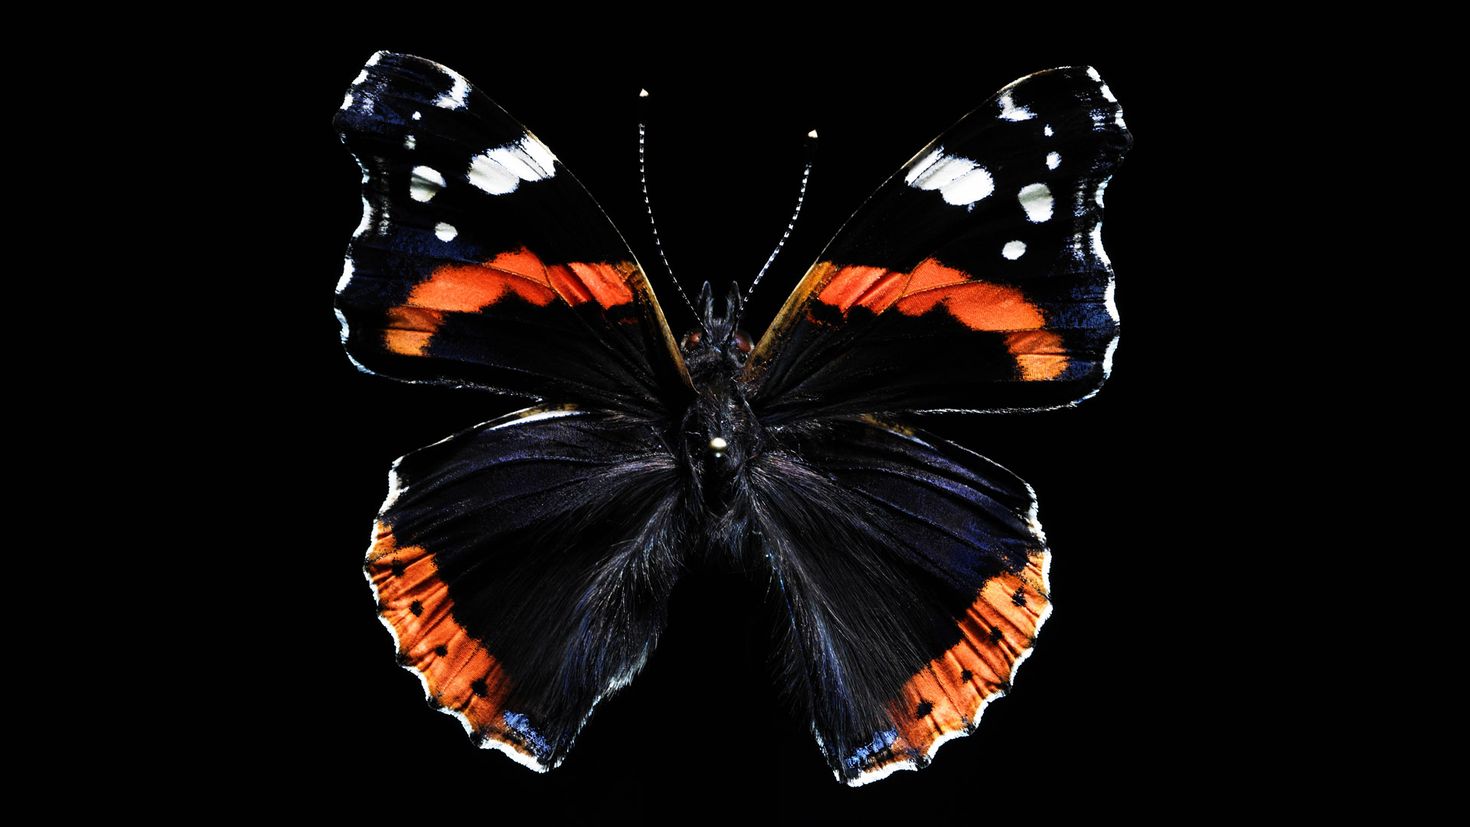 Картинки на телефон. Бабочка Чернушка эфиопка. Бабочка Монарх бабочка Адмирал. Черный Кардинал бабочка. Бабочки на черном фоне.